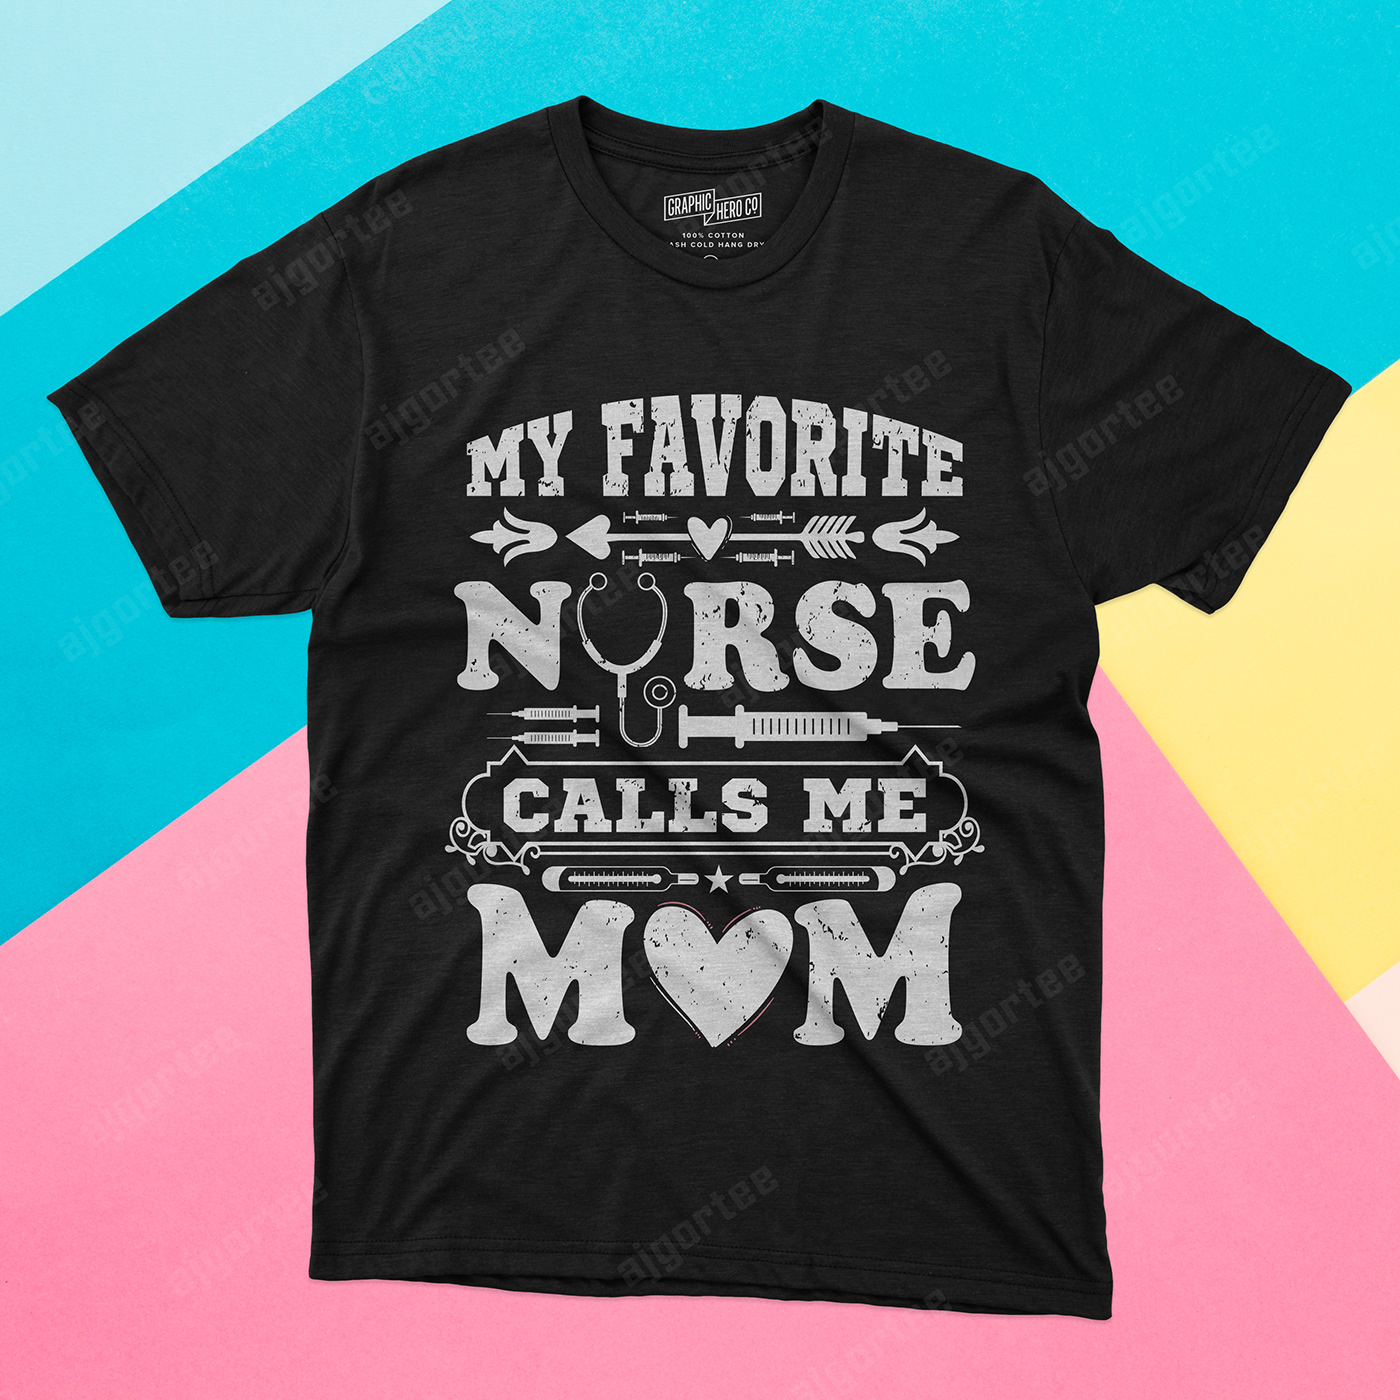 apparel clothes international nurses day nurse nurse design Nurse T shirt nurse tee nursing nursing t shirt nurse shirt